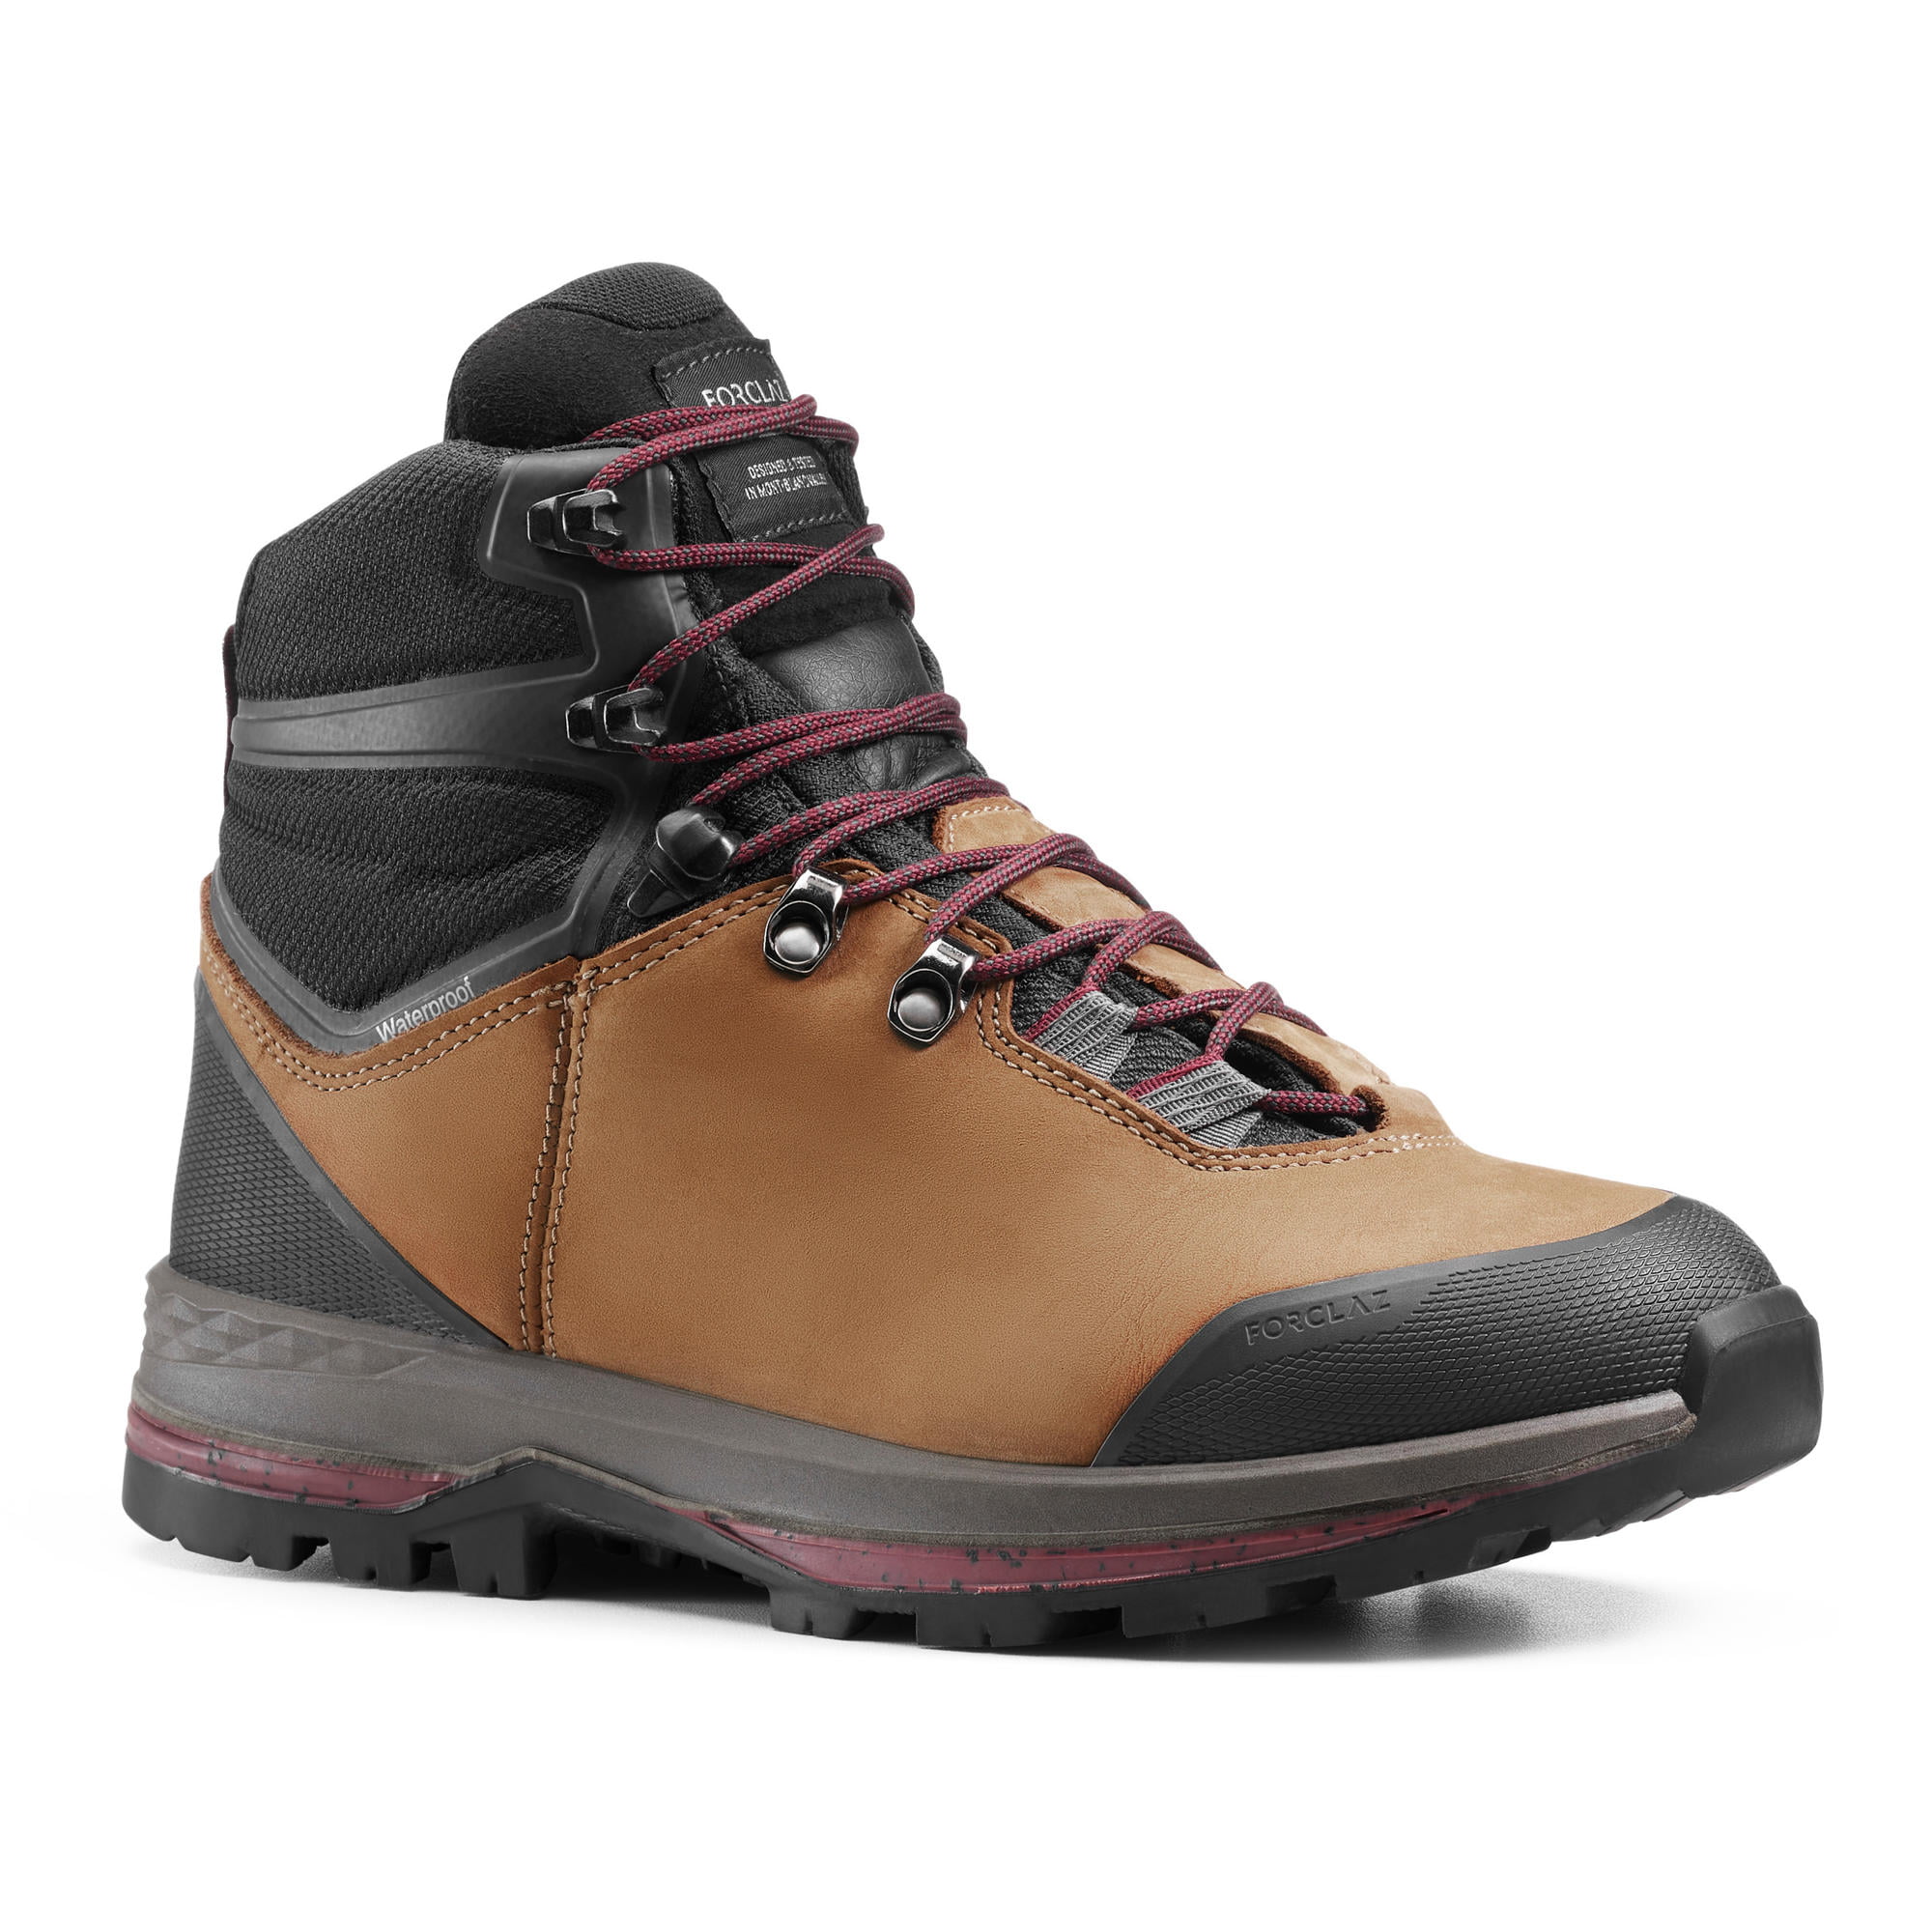 decathlon women's hiking boots